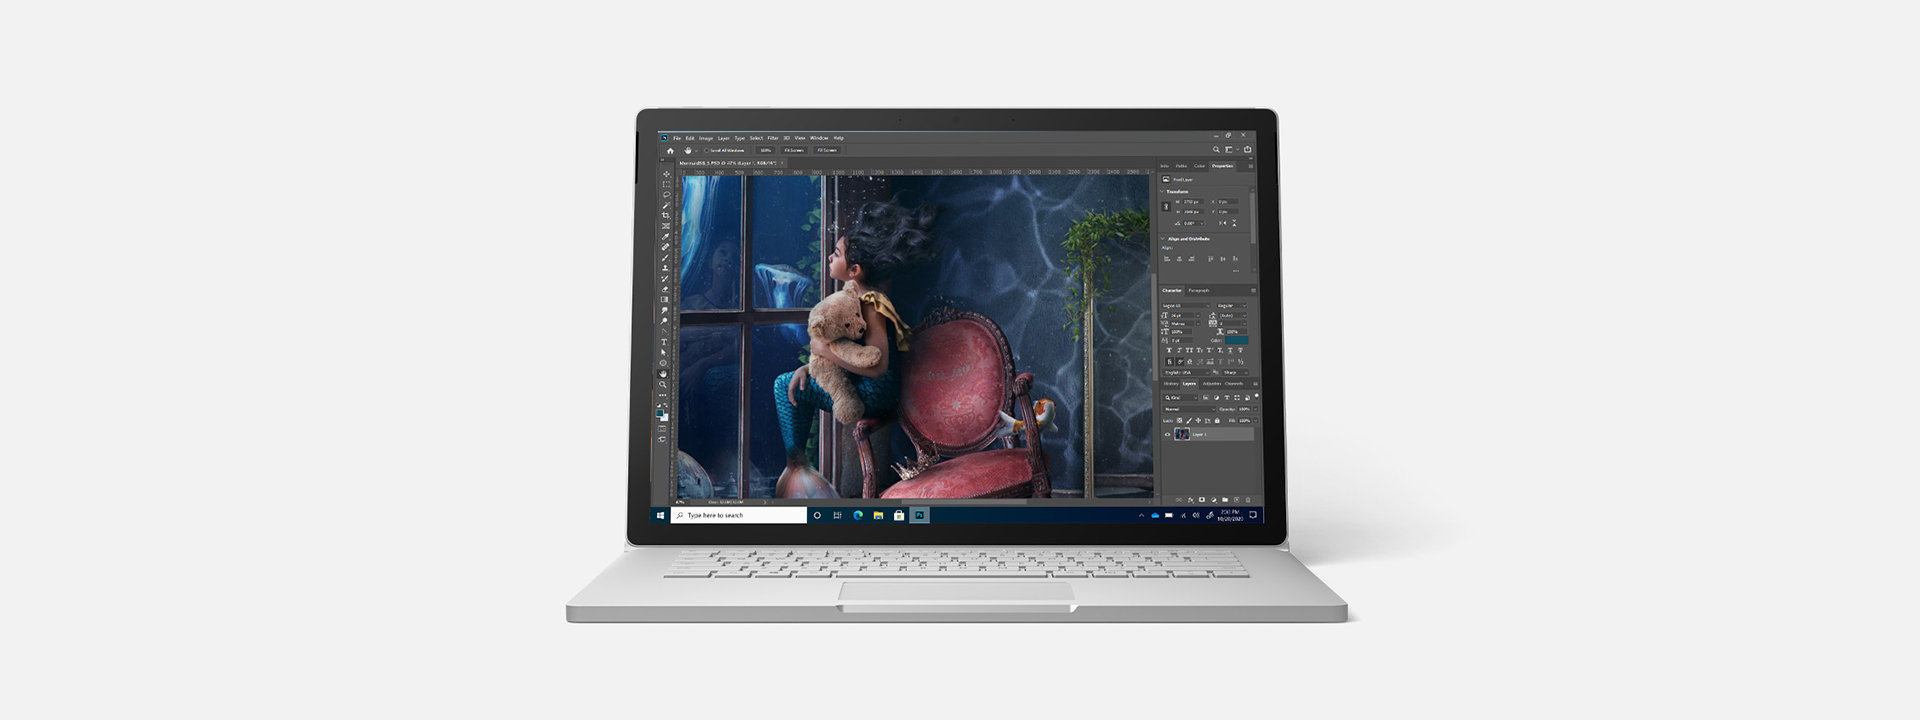 Surface Book 3 running Adobe Photoshop.